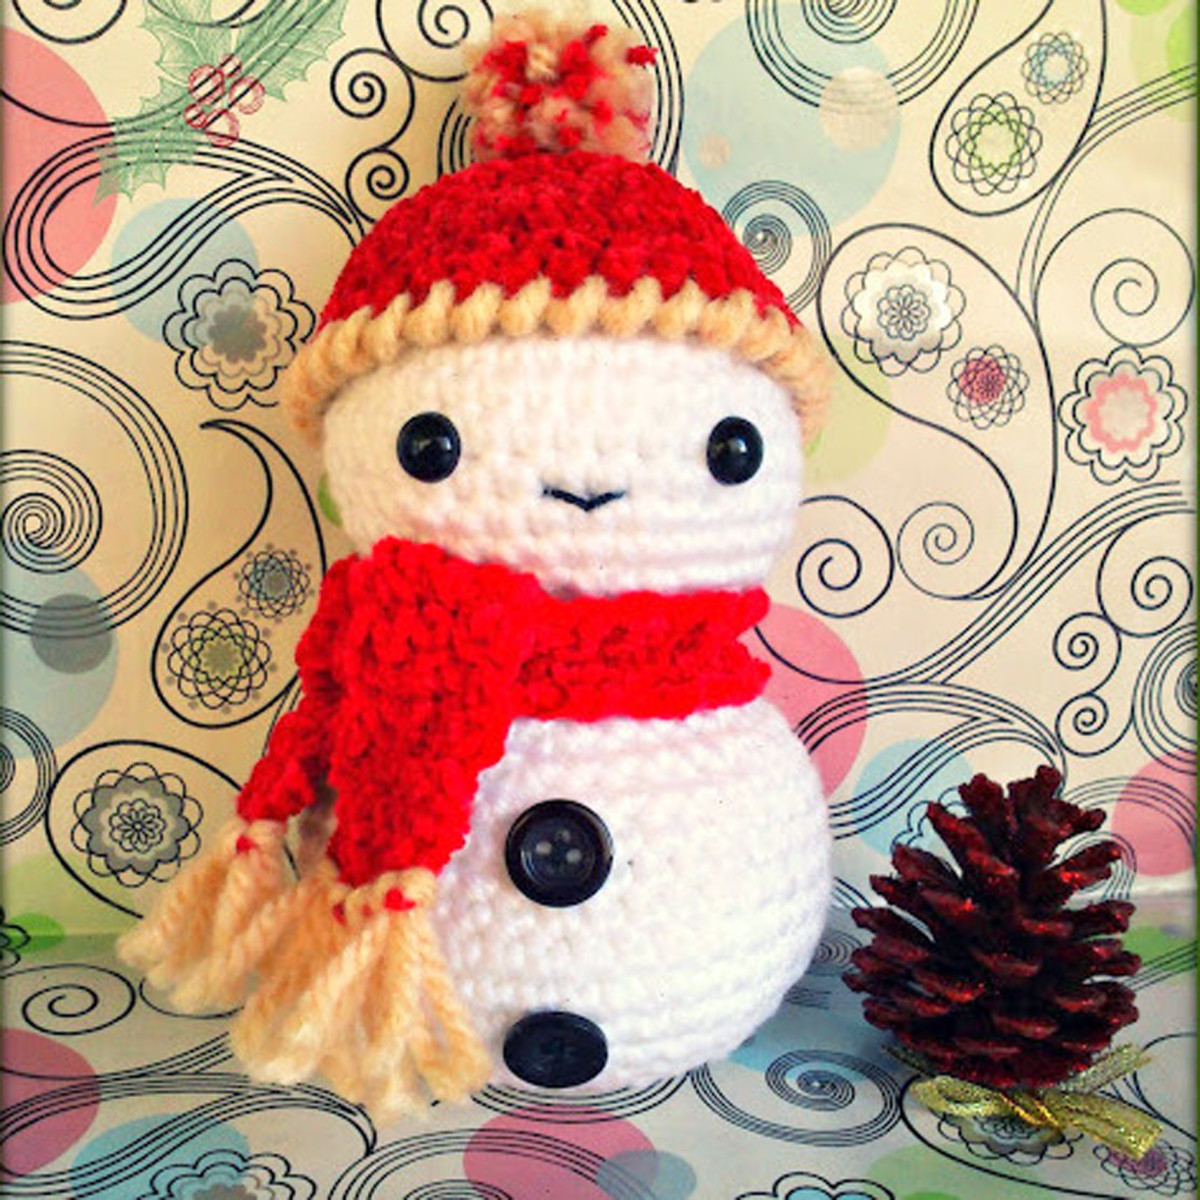 Free crochet pattern amigurumi snowman.